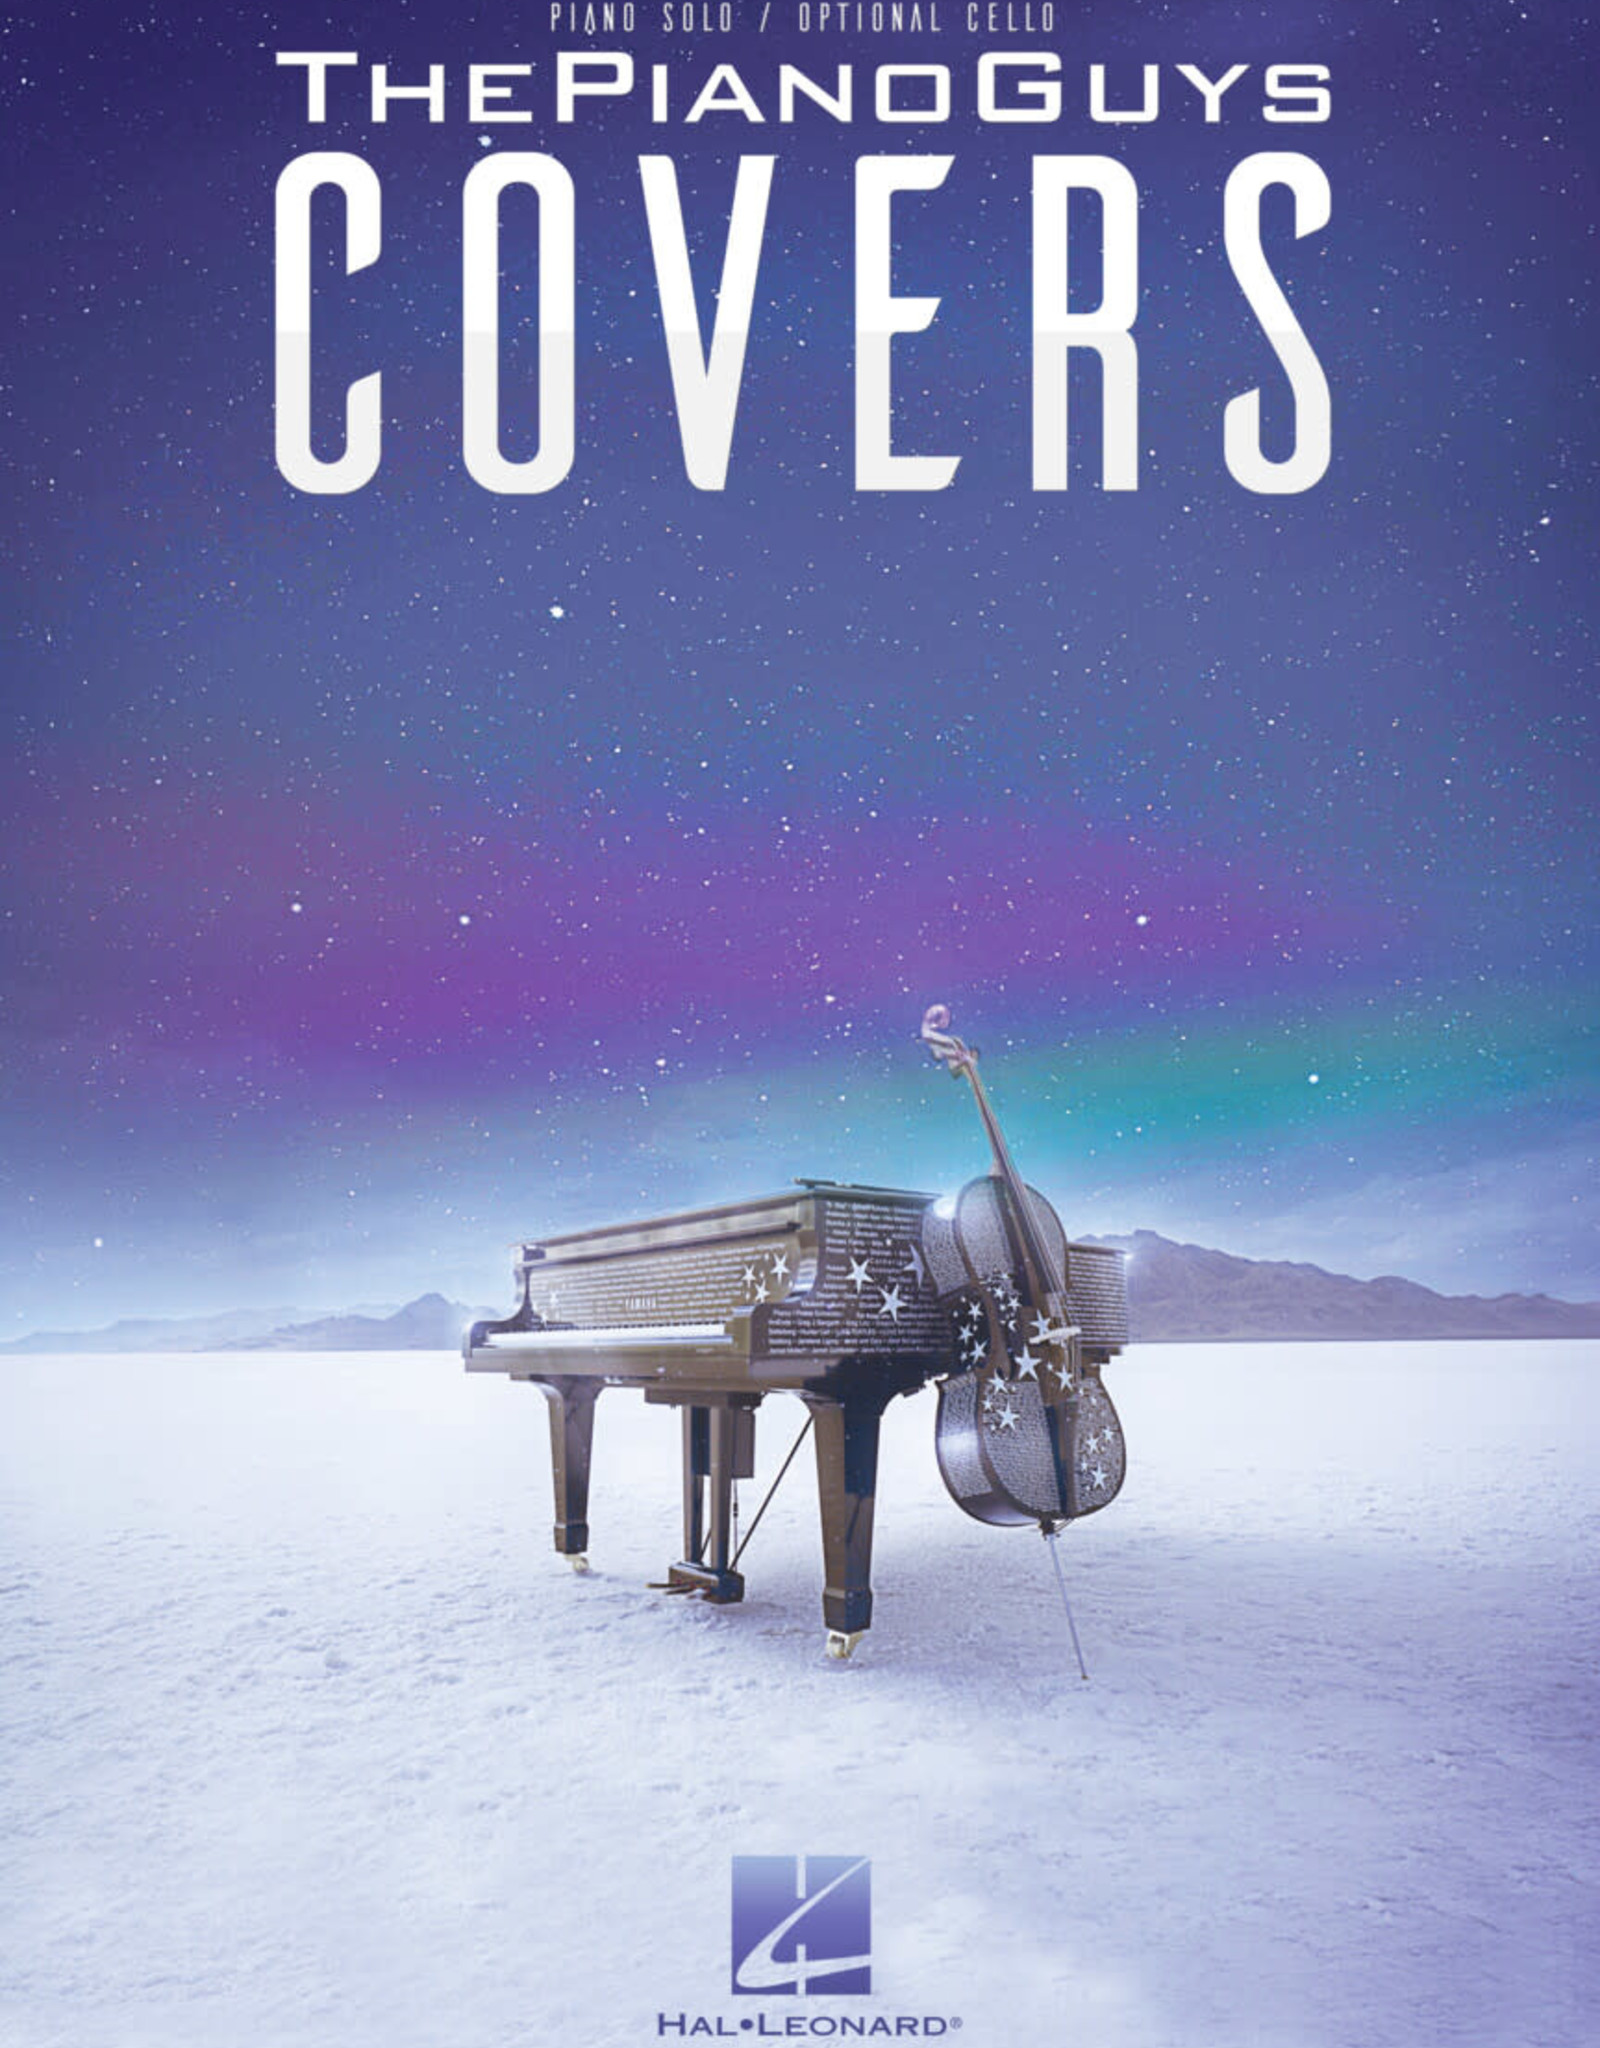 Hal Leonard Piano Guys - Covers (Piano Solo with Optional Cello)